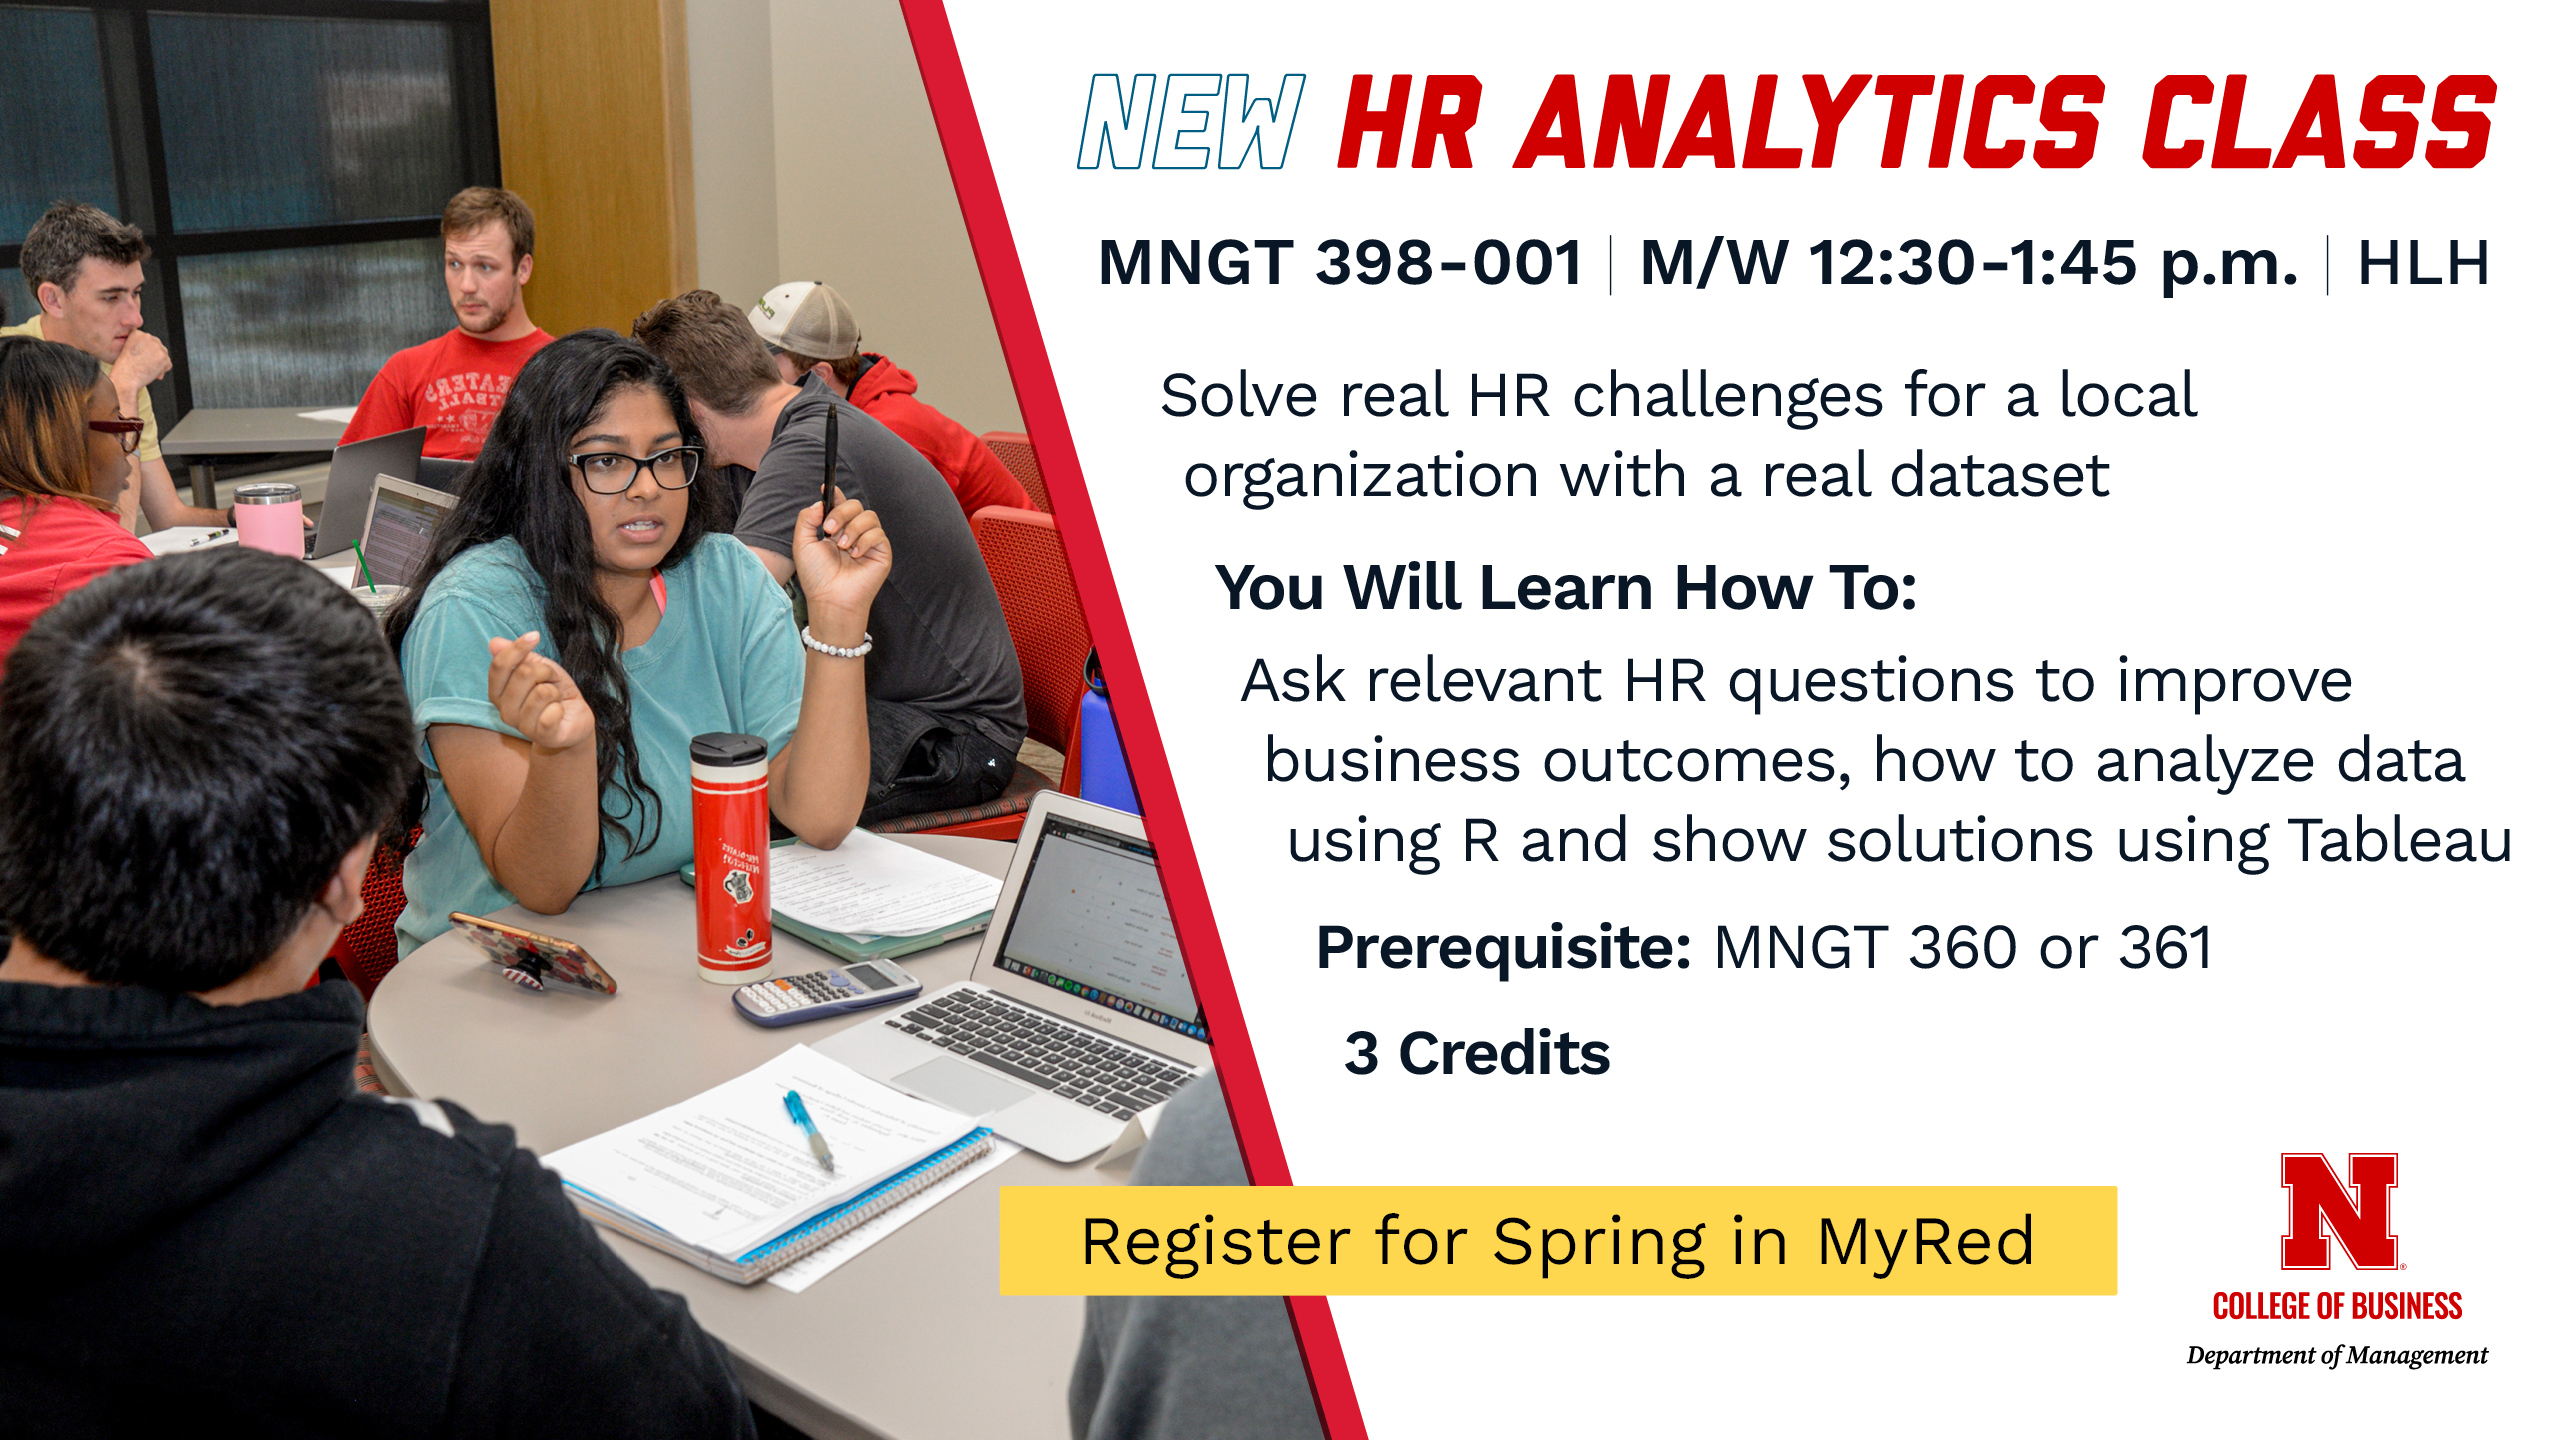 MNGT 398-001 New HR Analytics Class